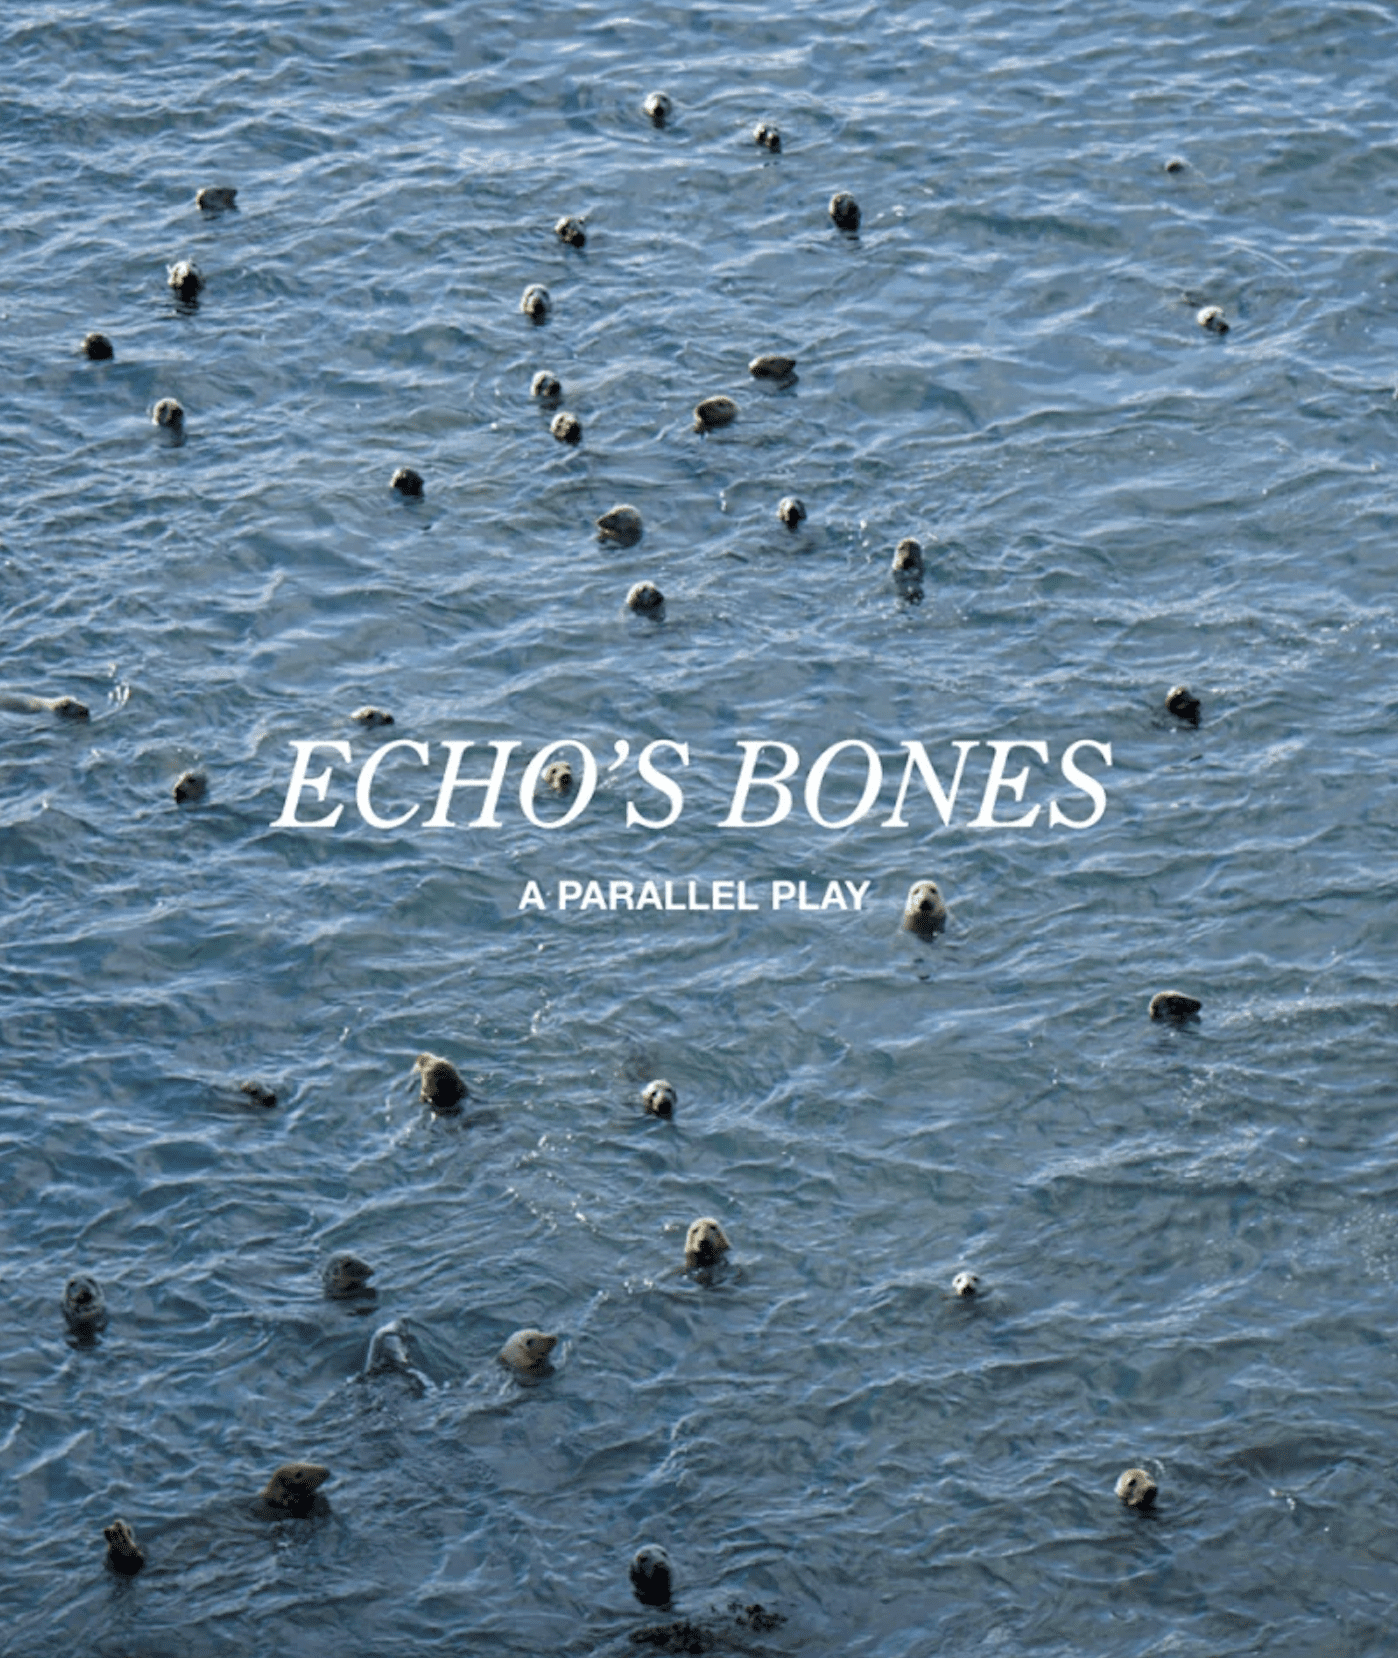 echos bones